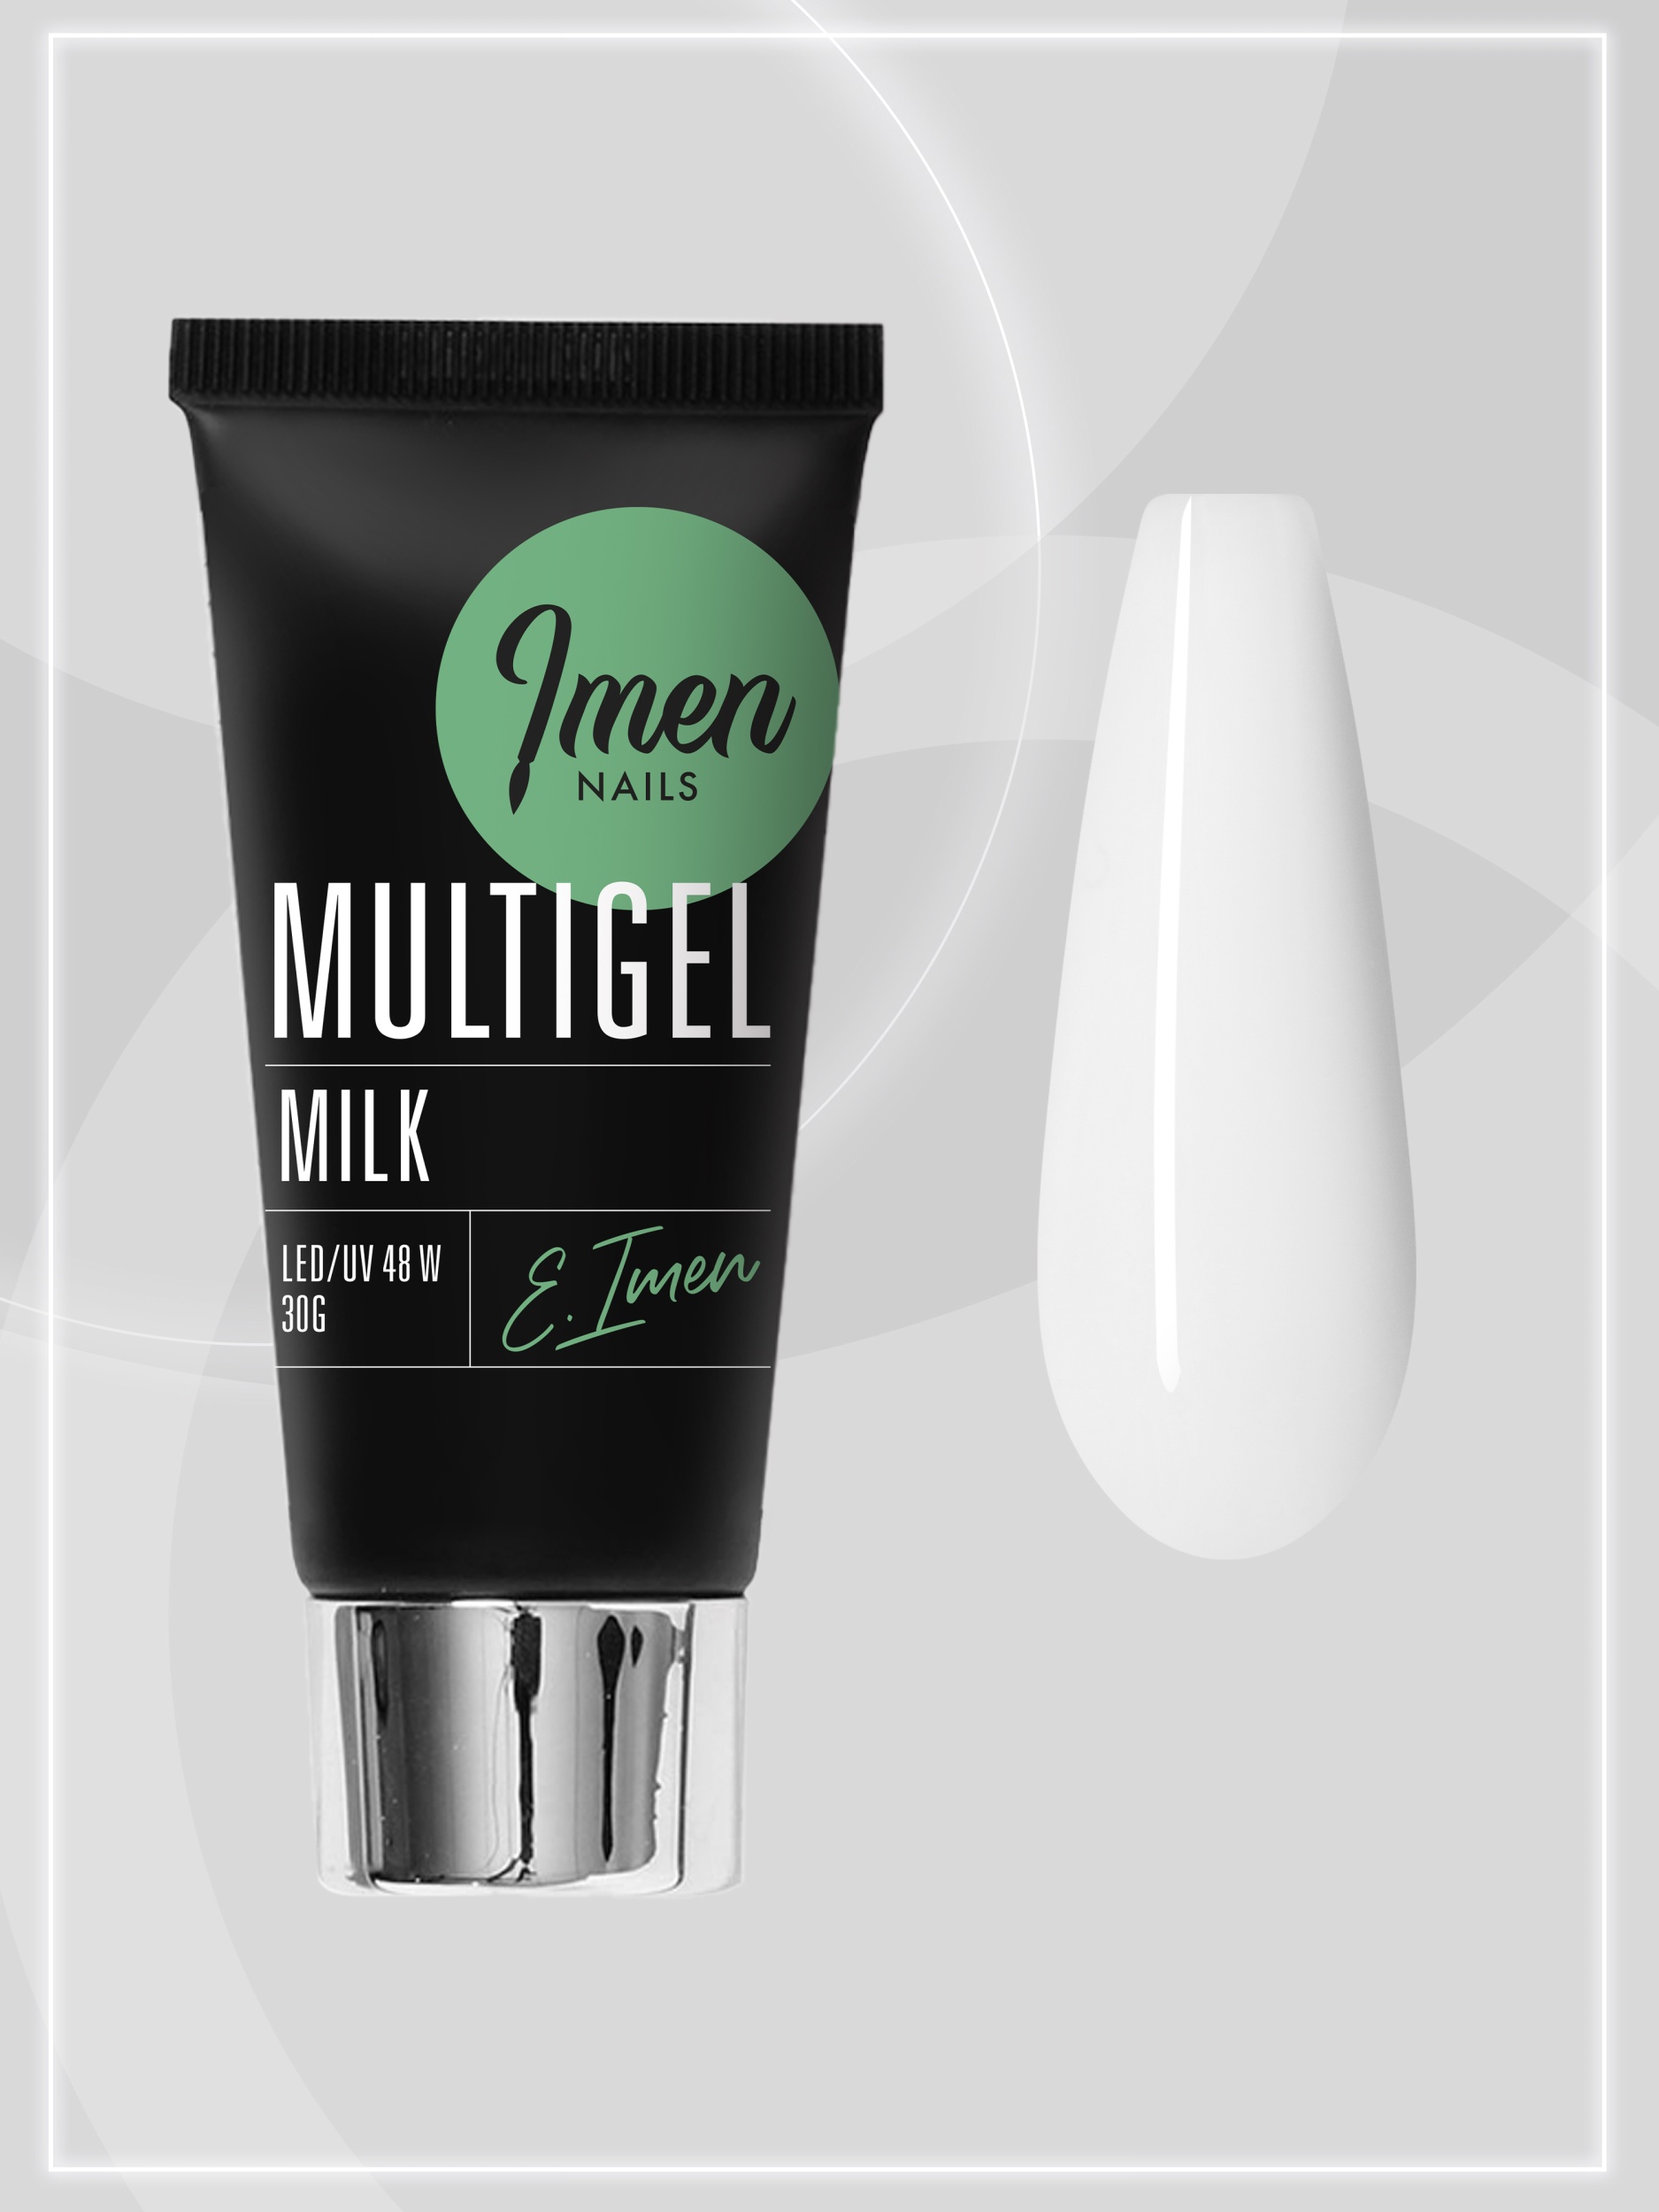 Multigel Milk Мультигель (молочный) Imen, 30мл